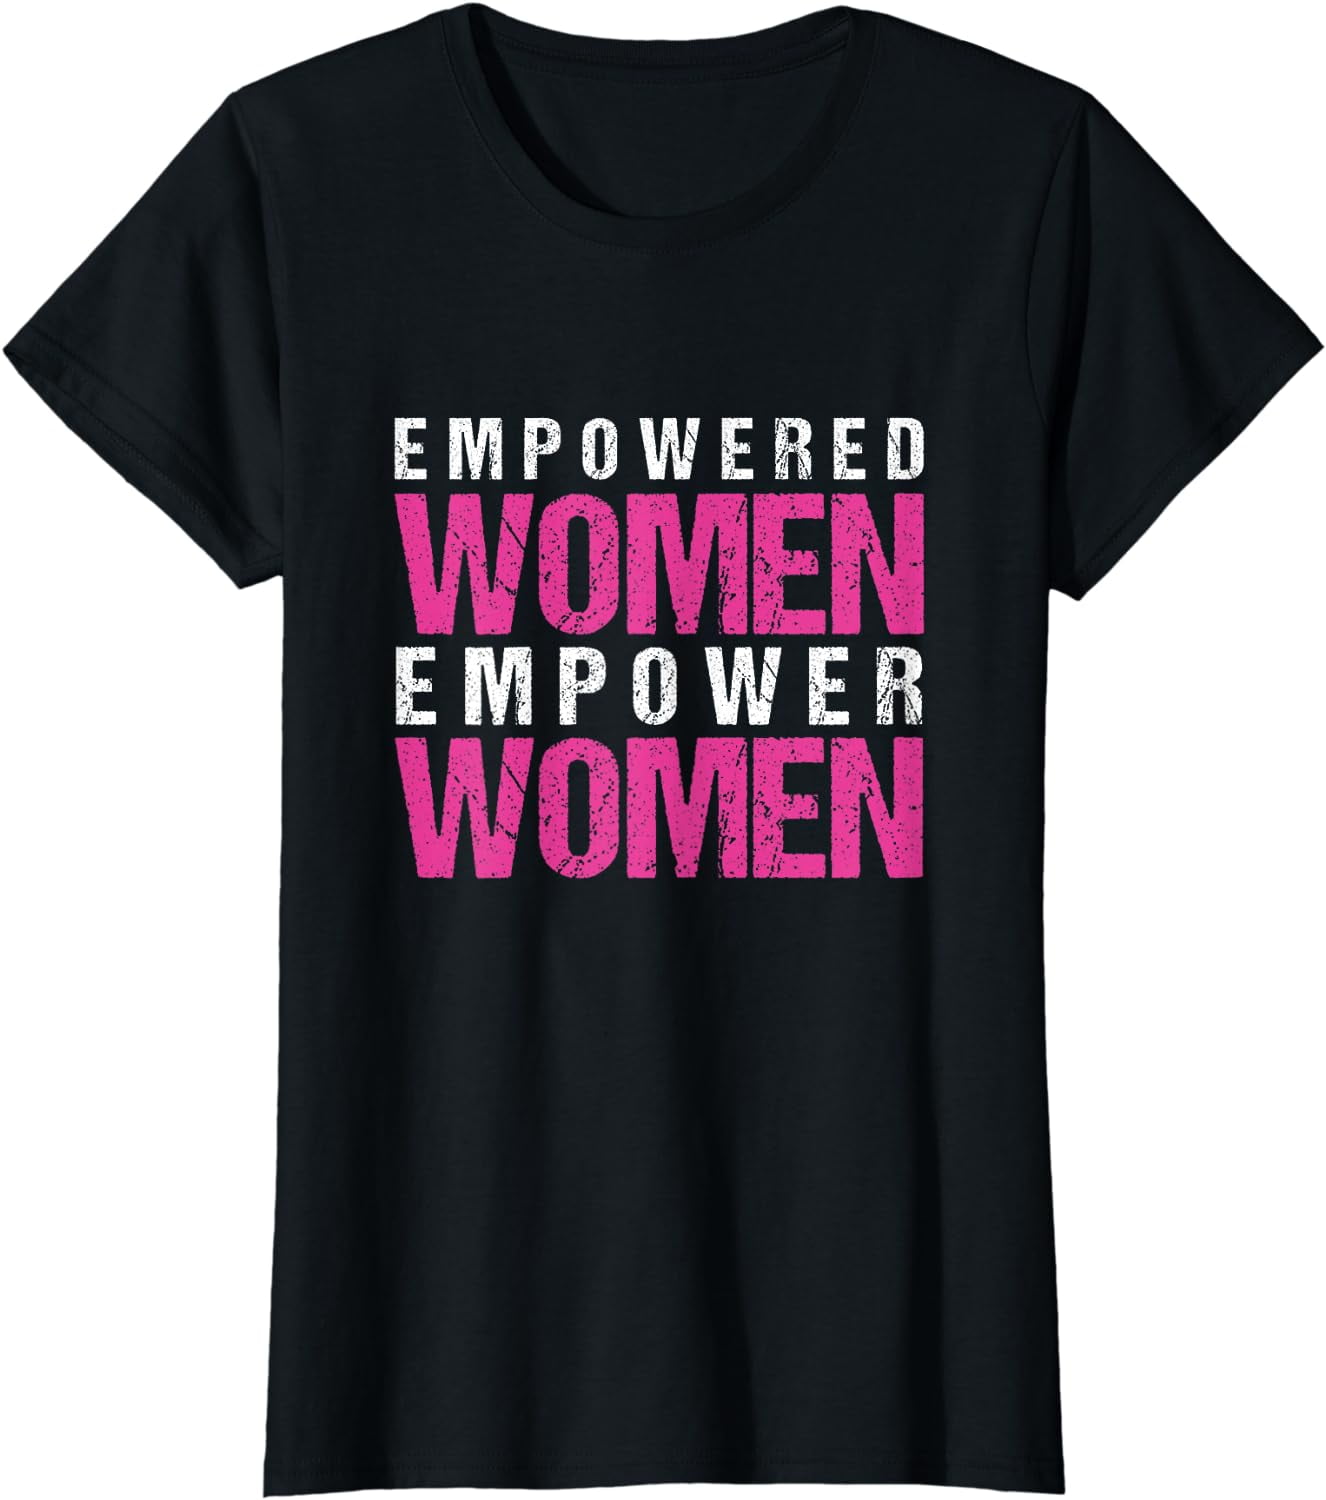 Empowered Woman Empower Woman Feminist Feminism Female Gift T-Shirt ...